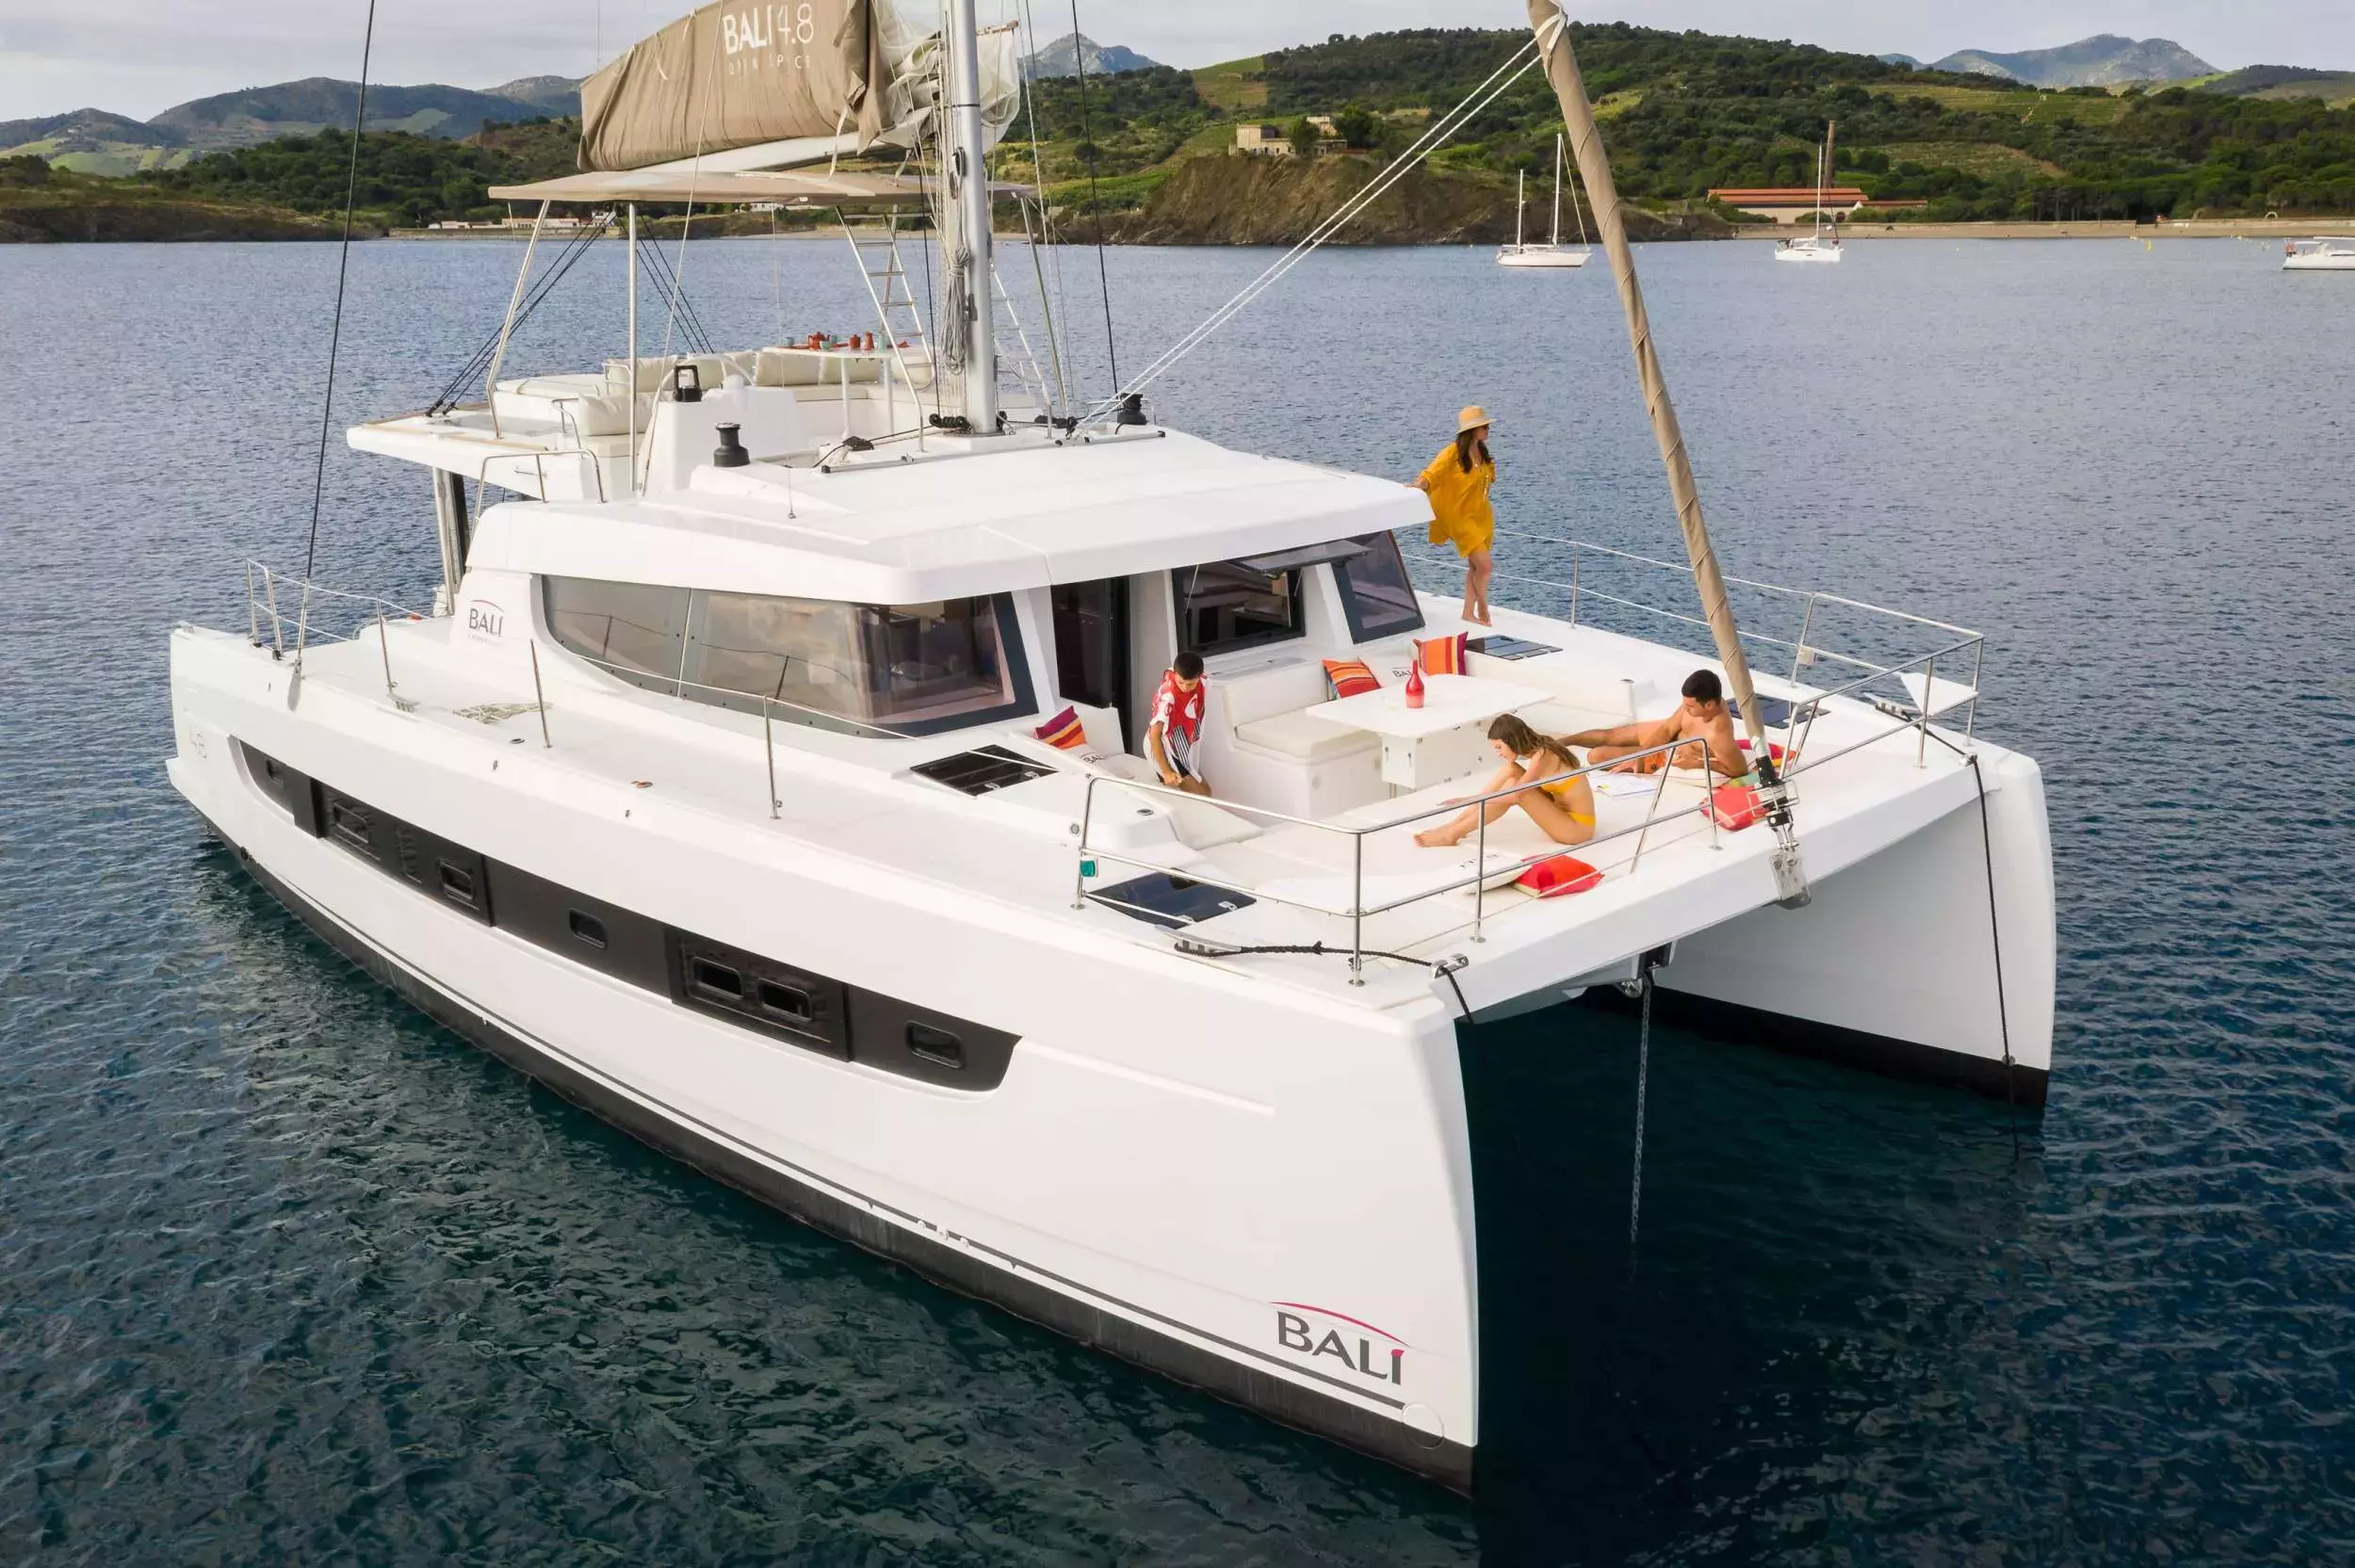 Yemaya by Bali Catamarans - Top rates for a Charter of a private Sailing Catamaran in Spain